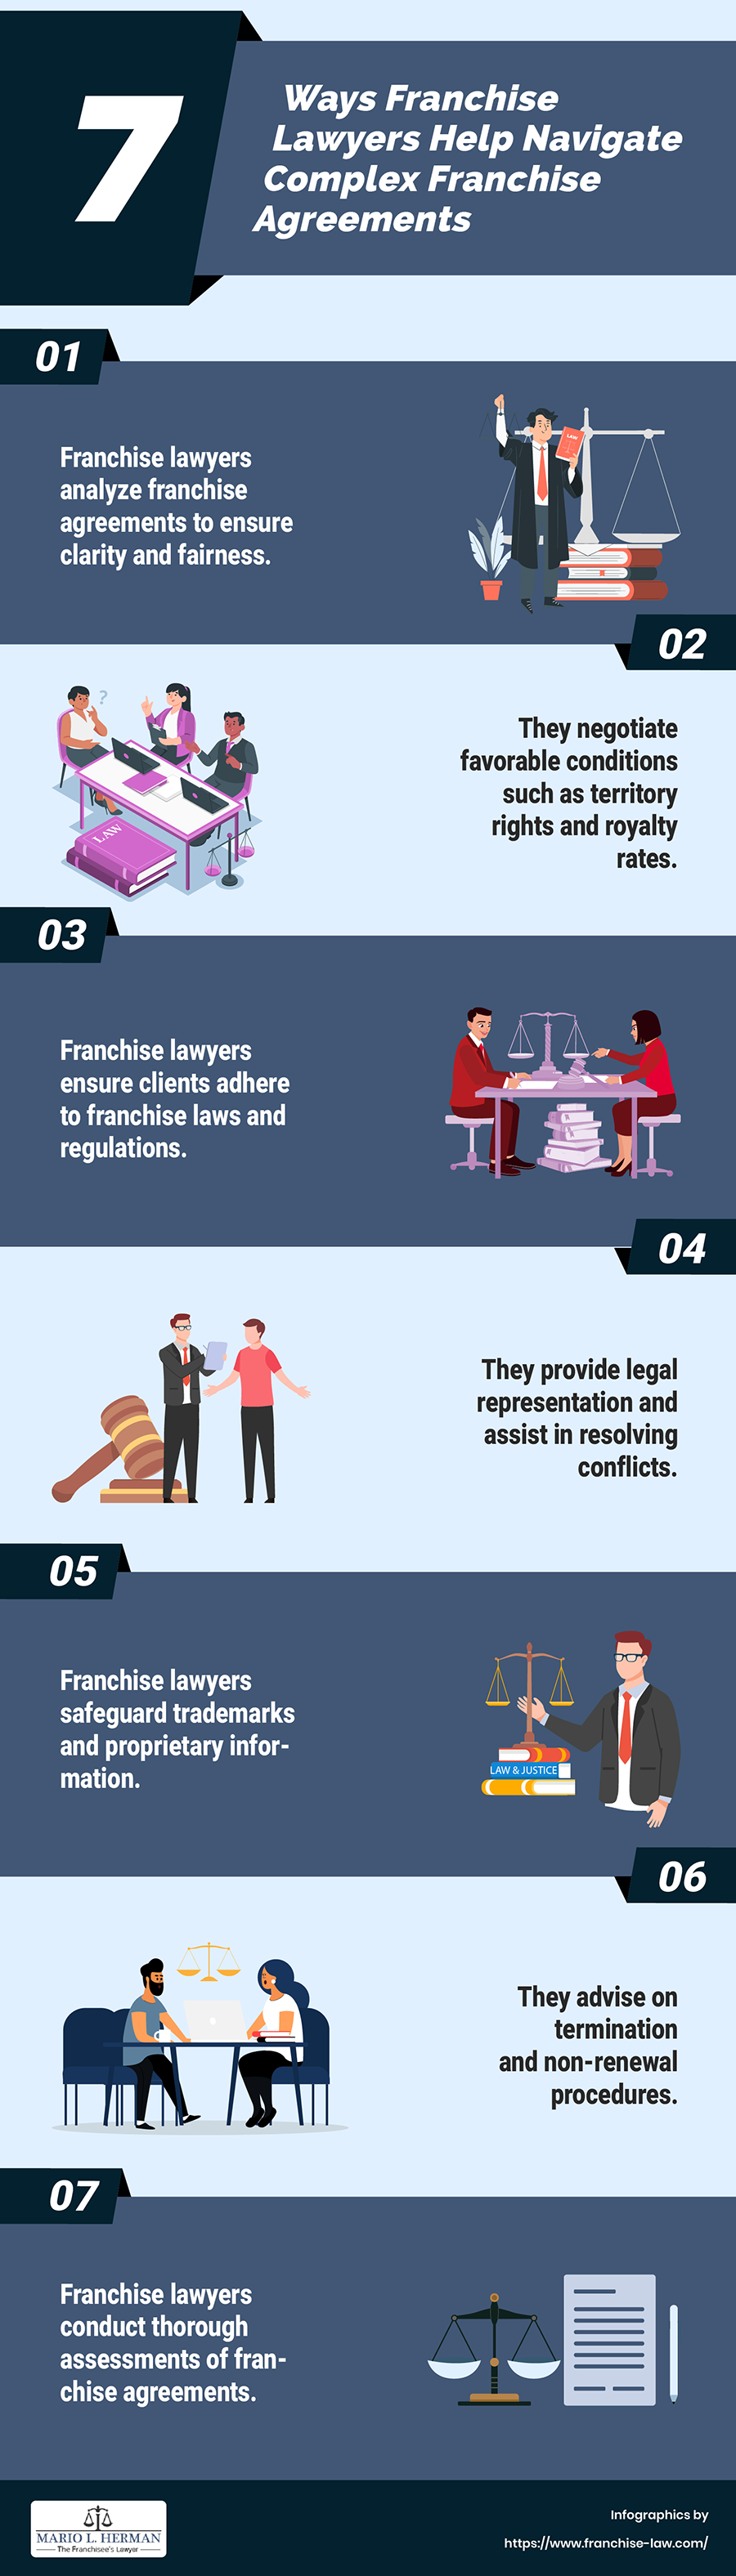 Ways Franchise Lawyers Help Navigate Complex Franchise Agreements